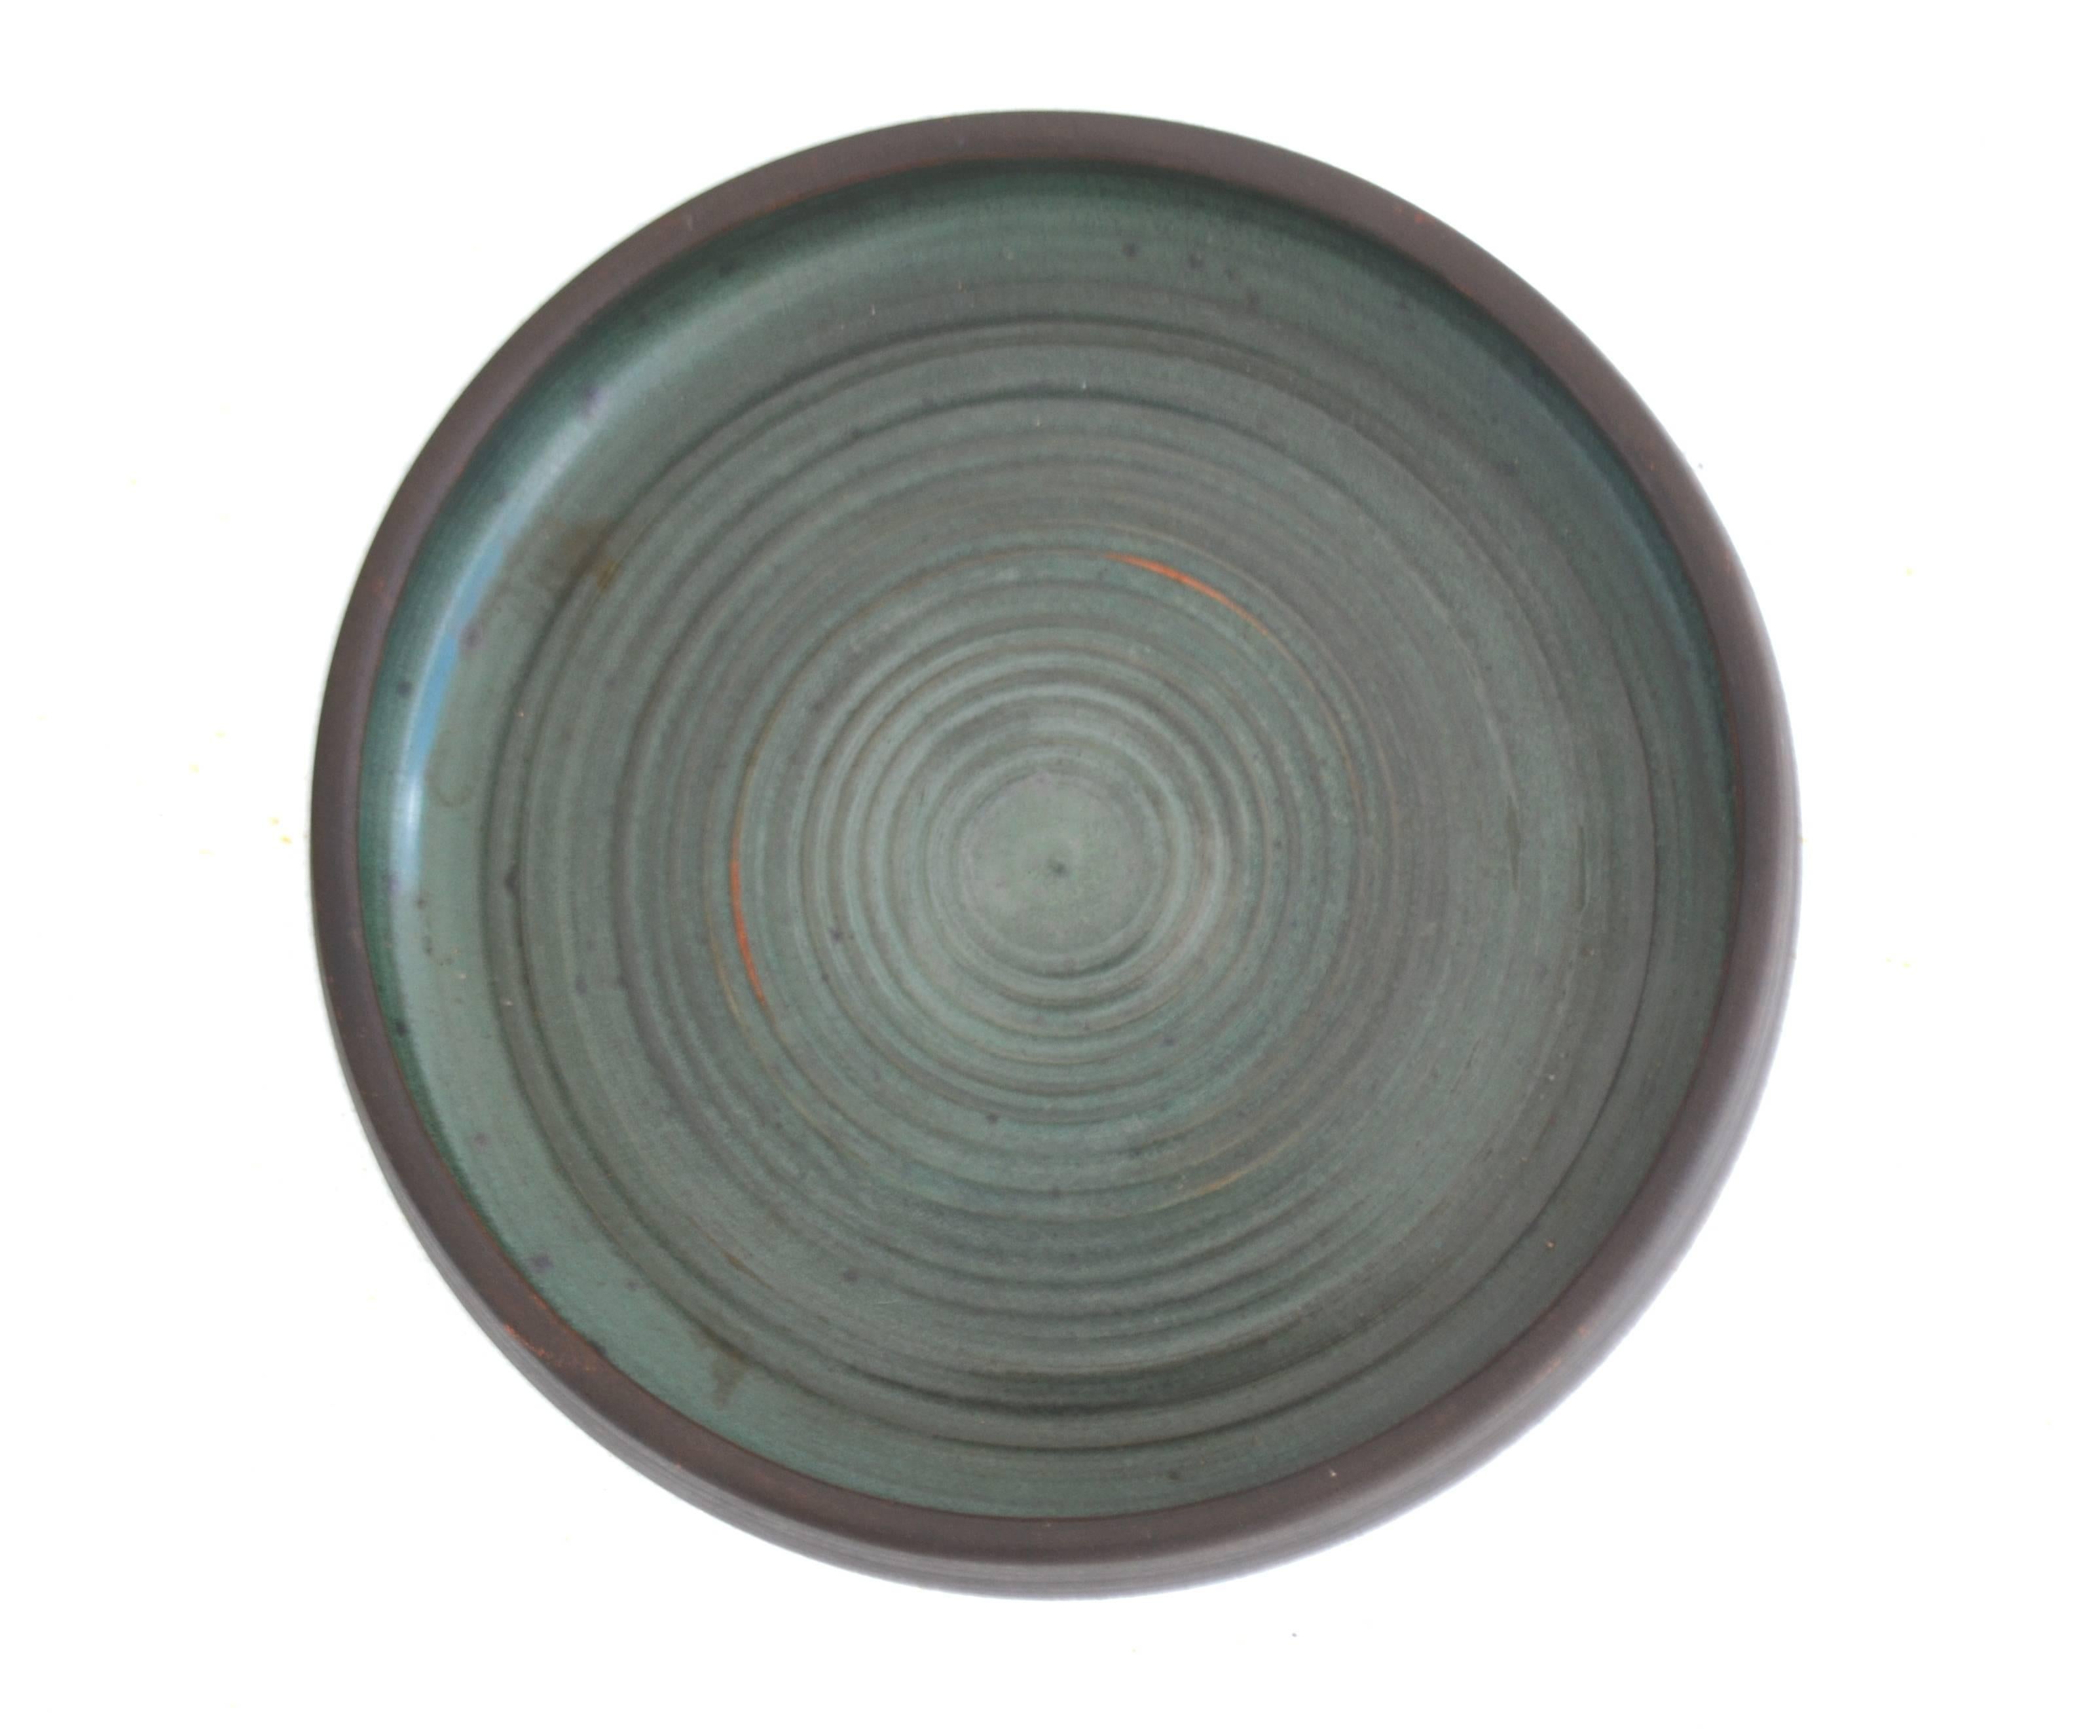 Mid-20th Century Hand Thrown Decorative Ceramic Bowl